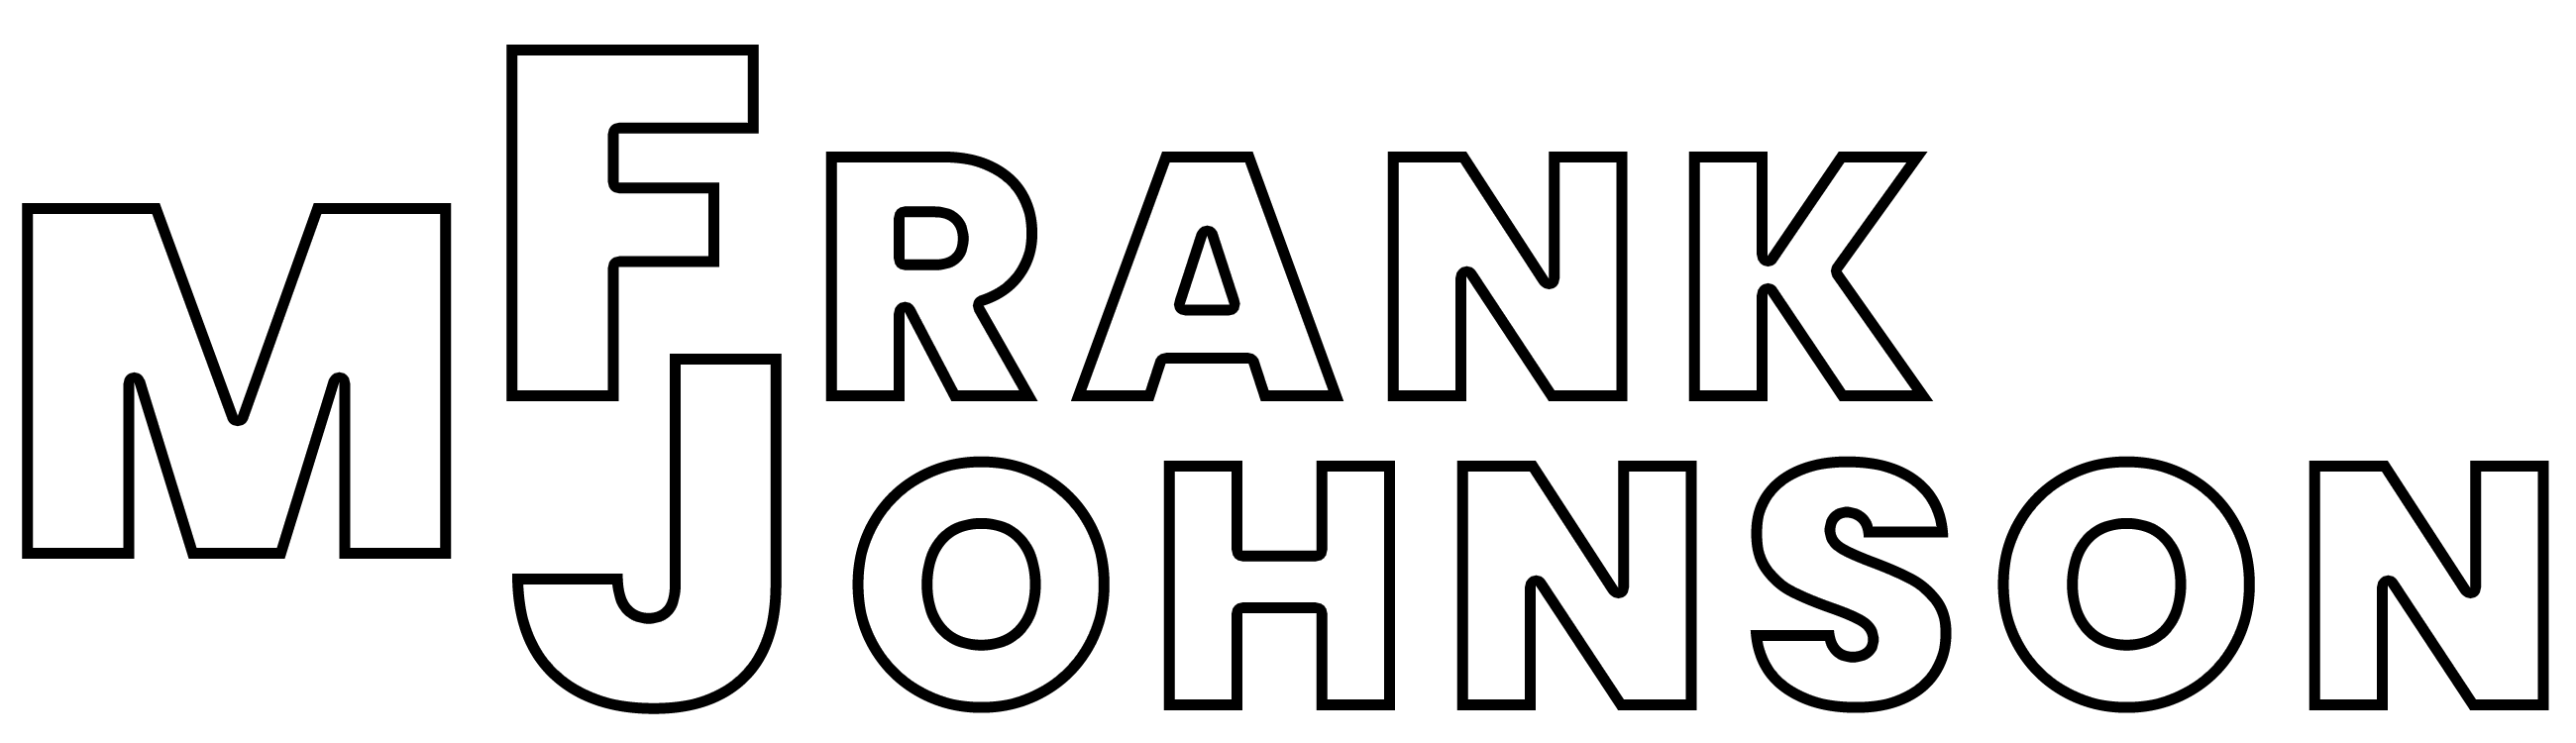 M Frank Johnson website logo-2600x750-300dpi-00